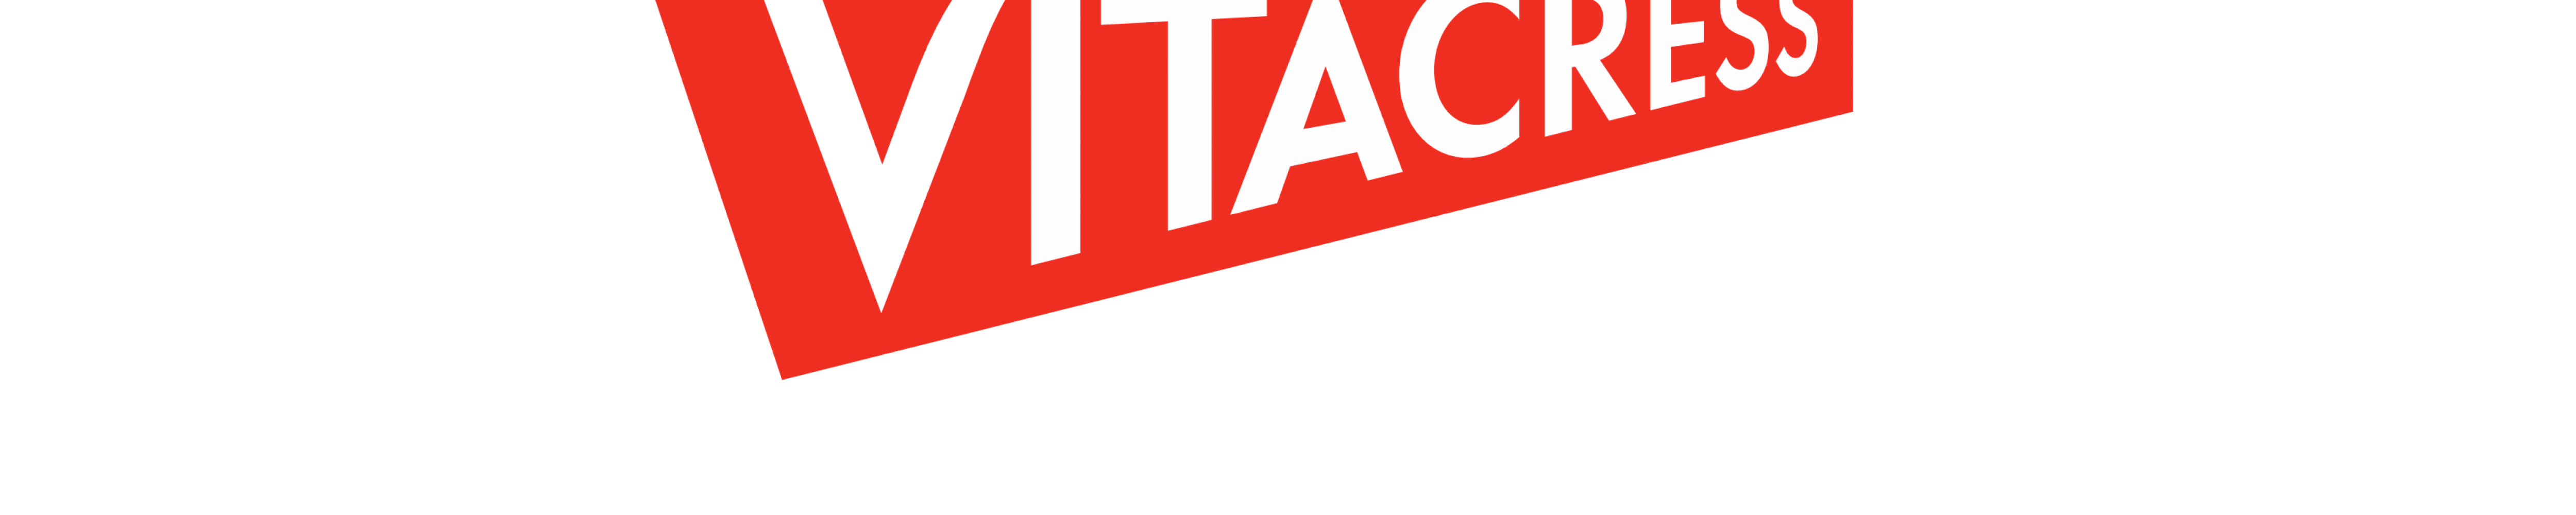 Vitacress_Logo